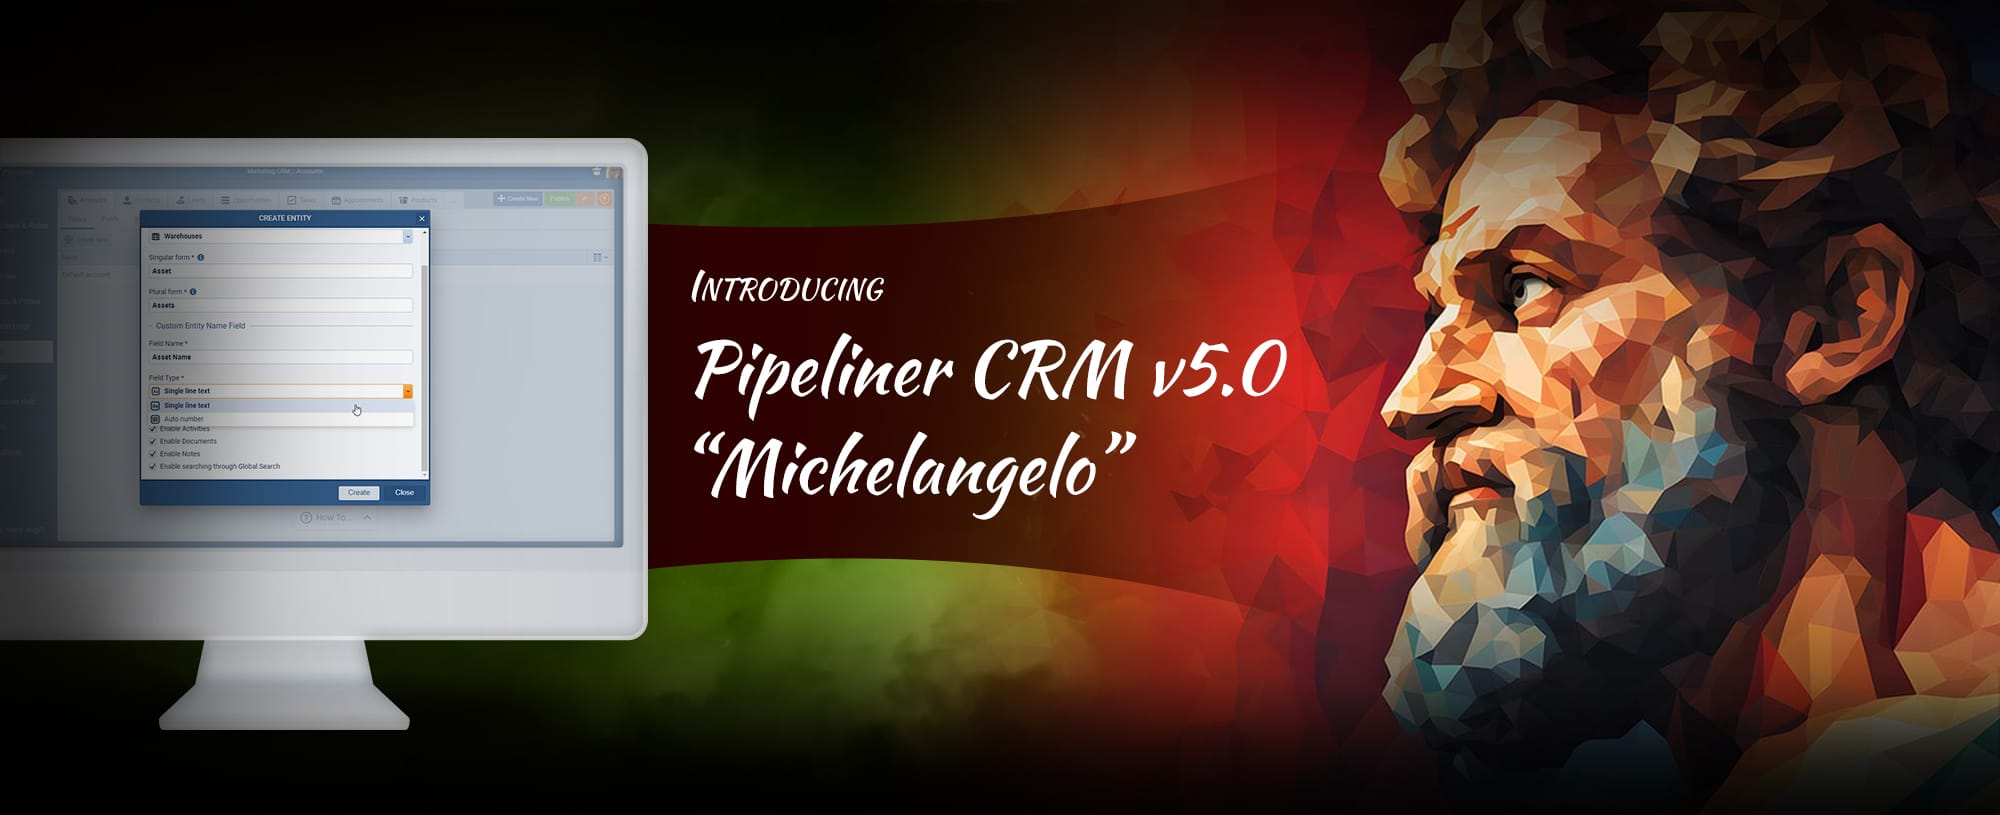 Pipeliner CRM v5.0 Michelangelo